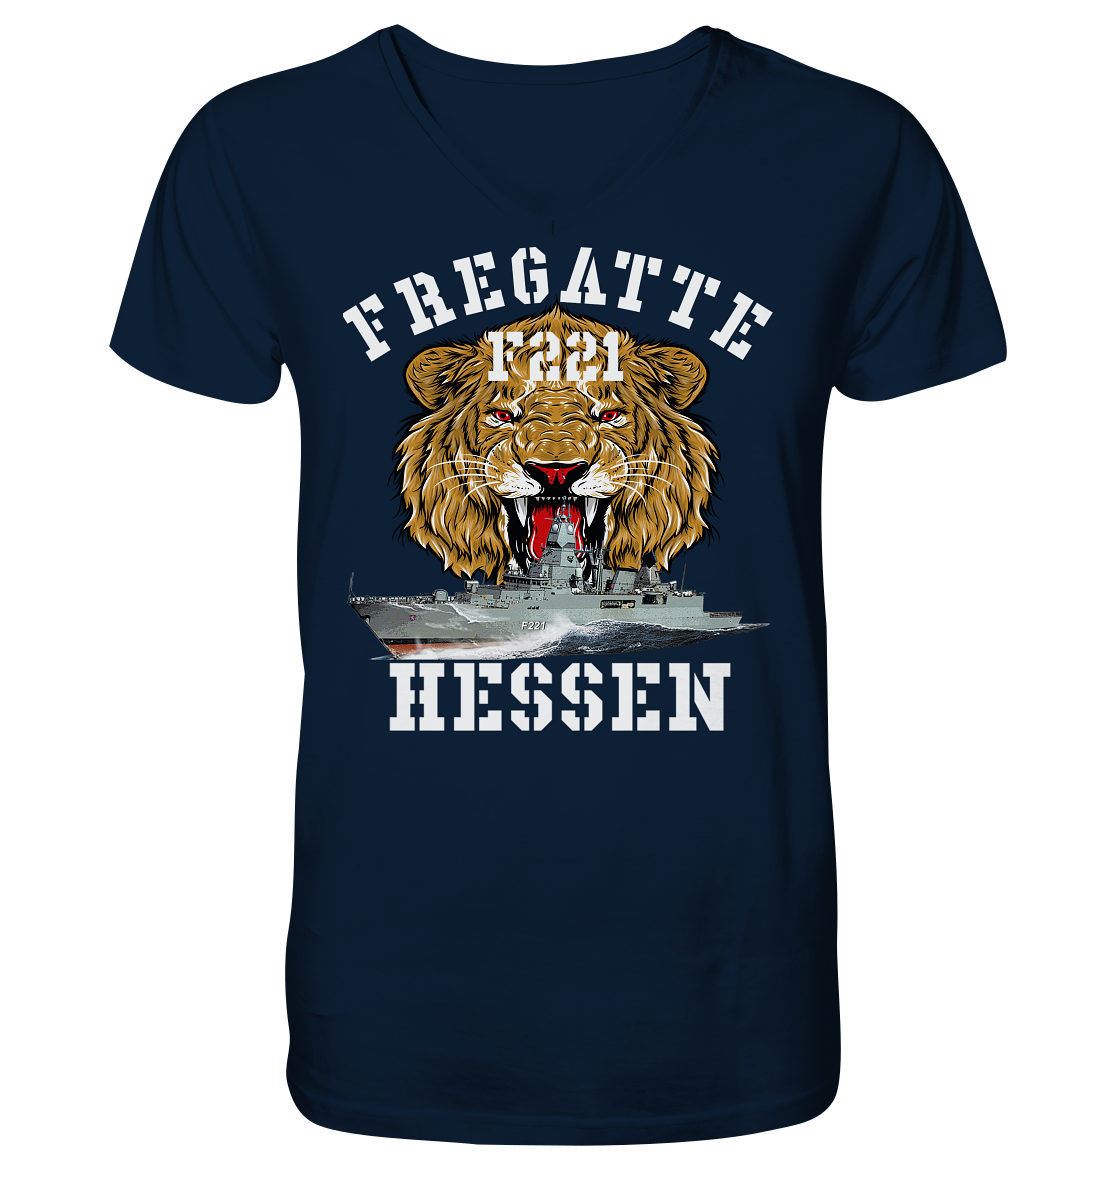 Fregatte F221 HESSEN Löwe - Mens Organic V-Neck Shirt